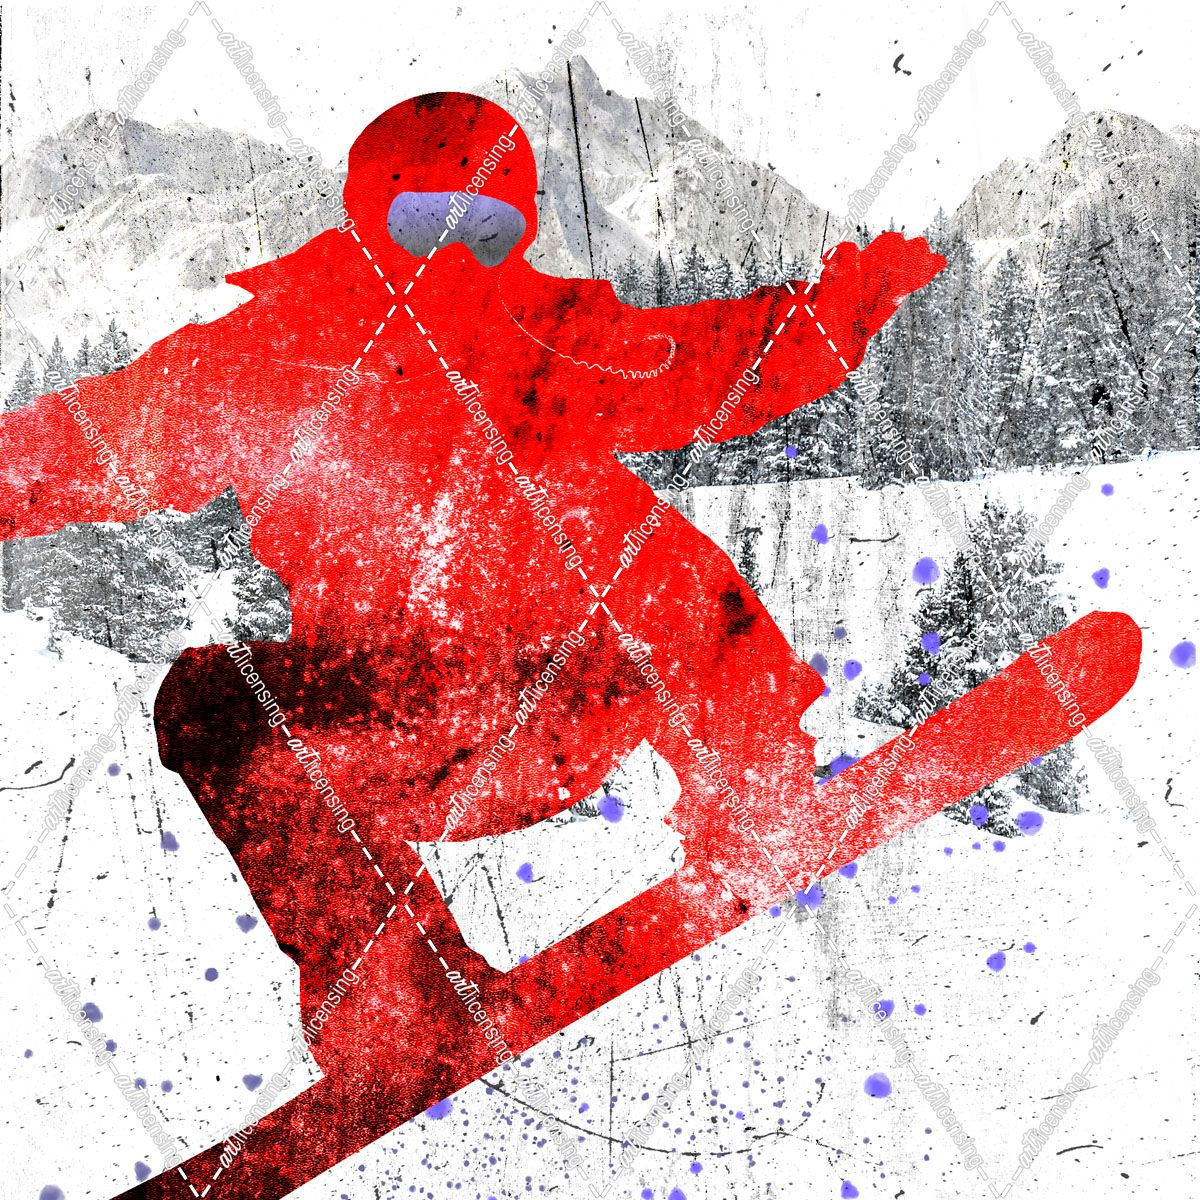 Extreme Snowboarder 01